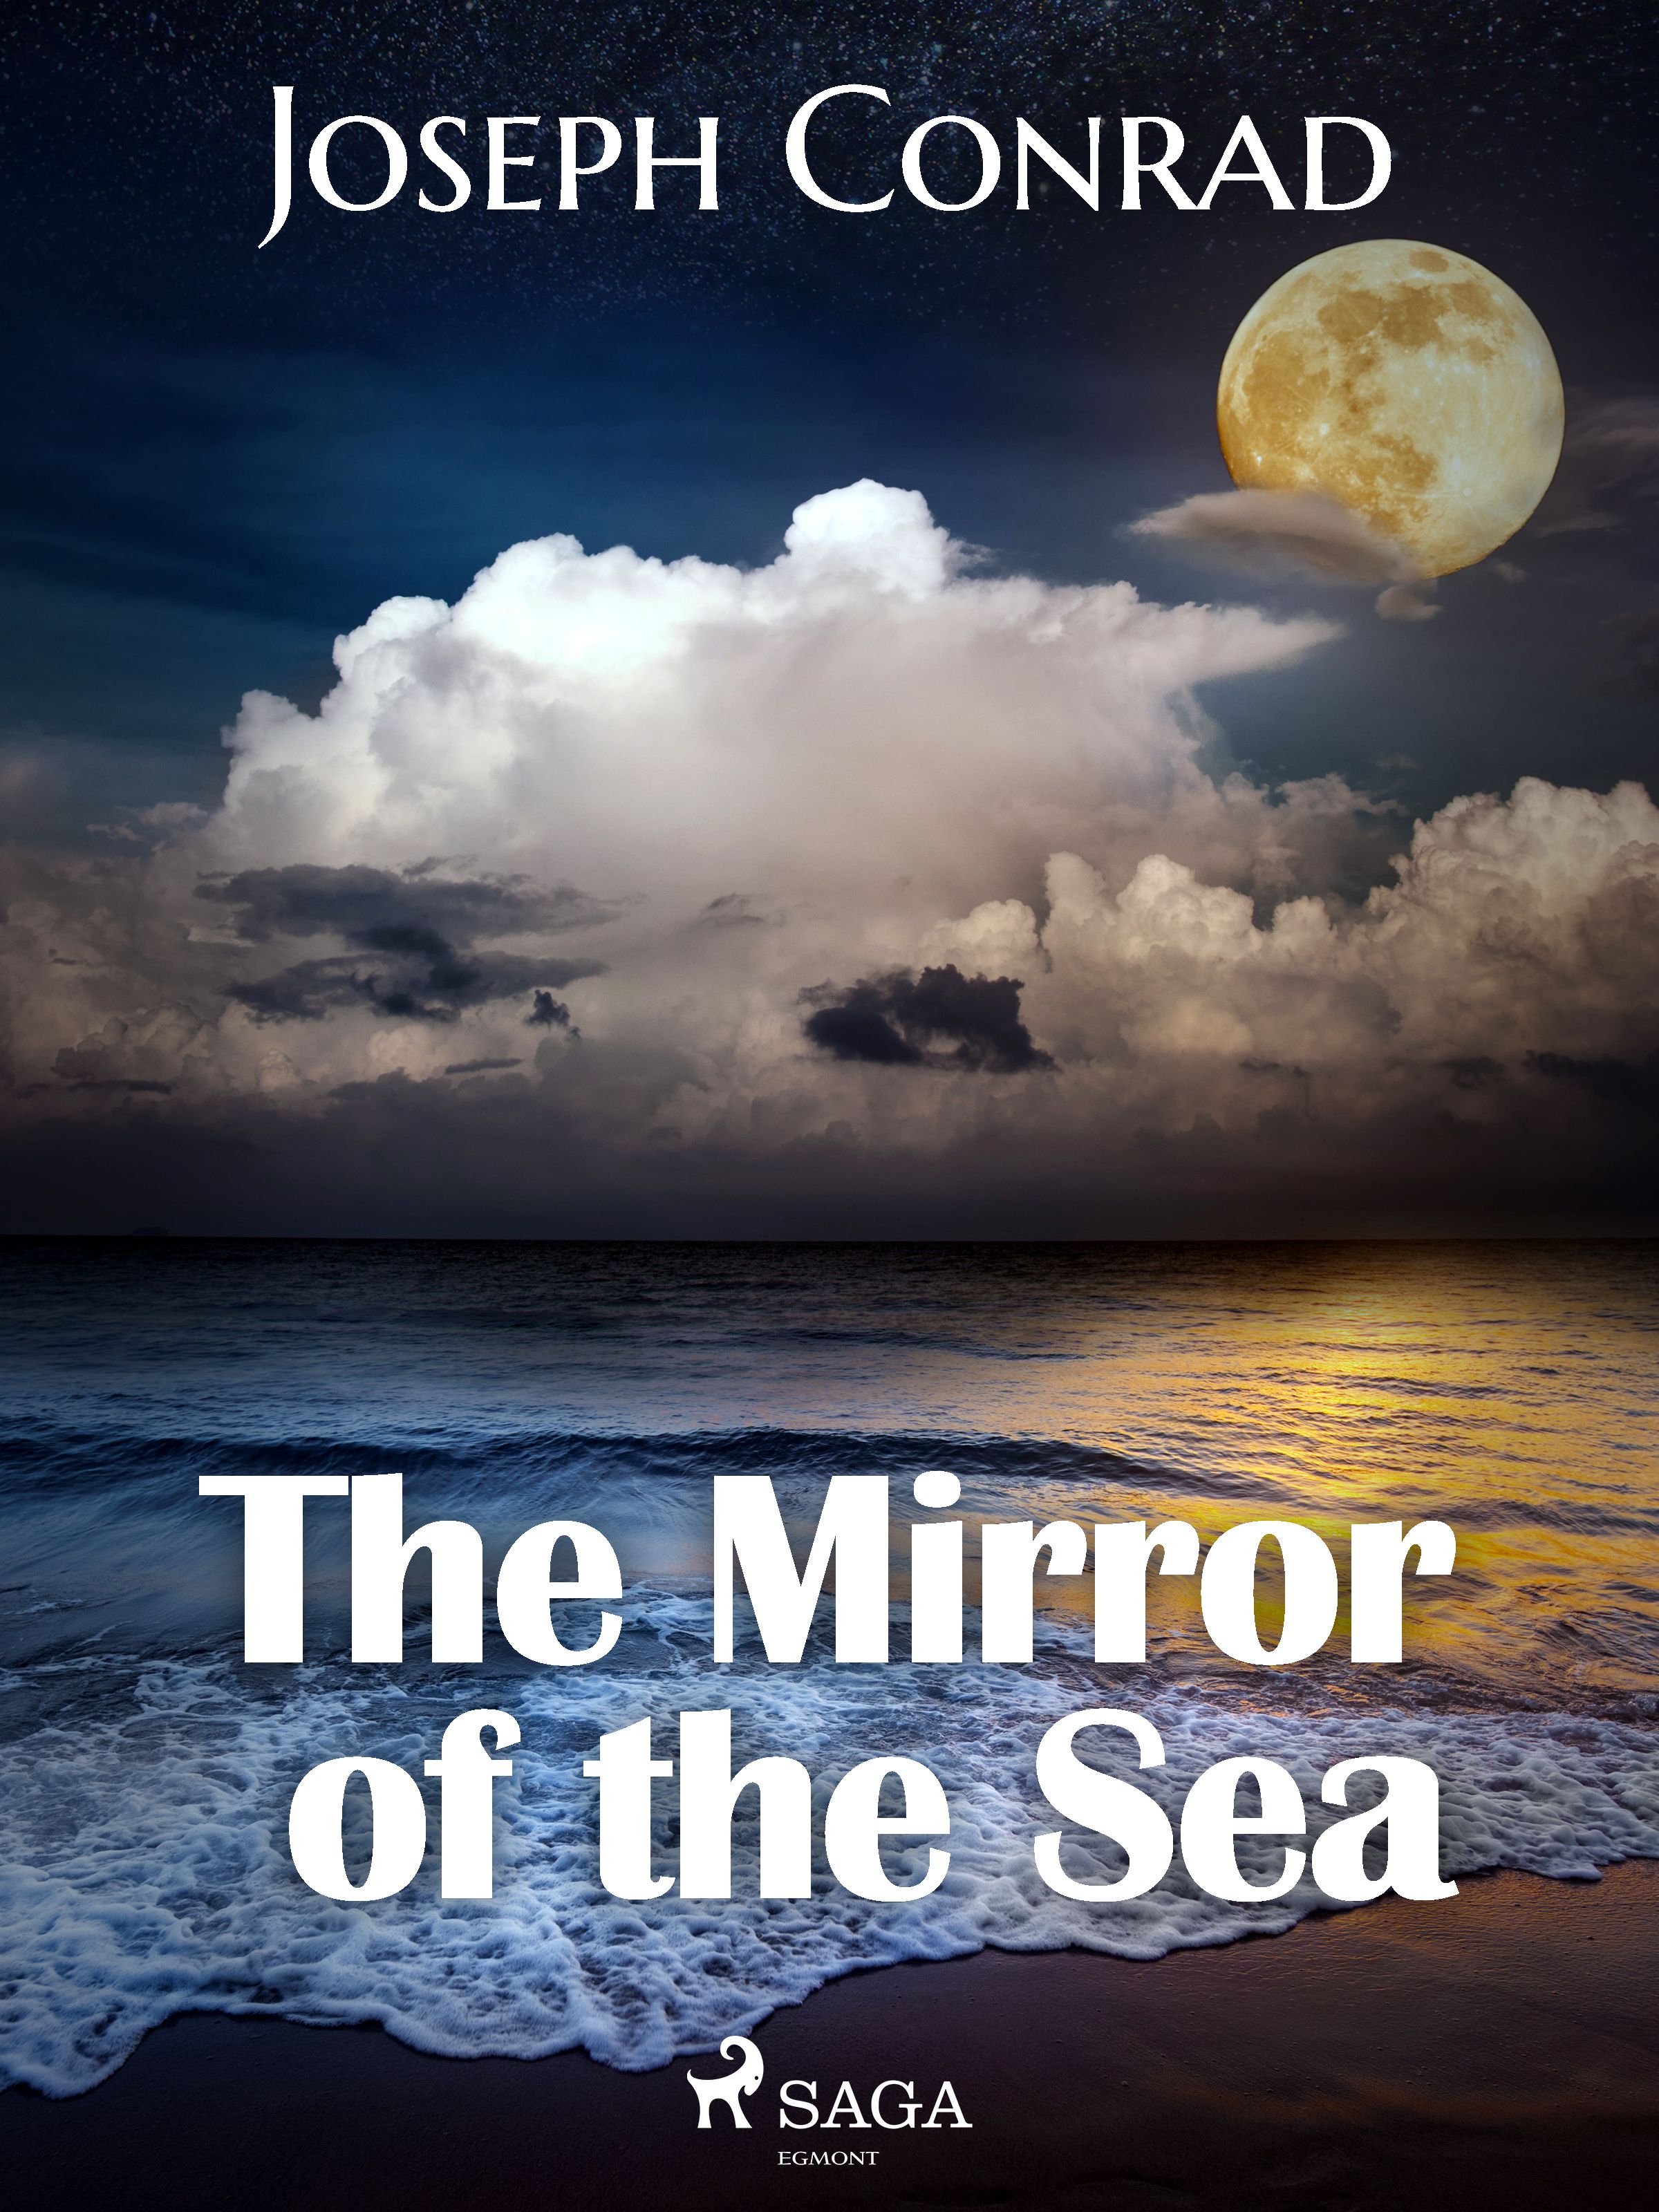 The Mirror of the Sea, e-bog af Joseph Conrad